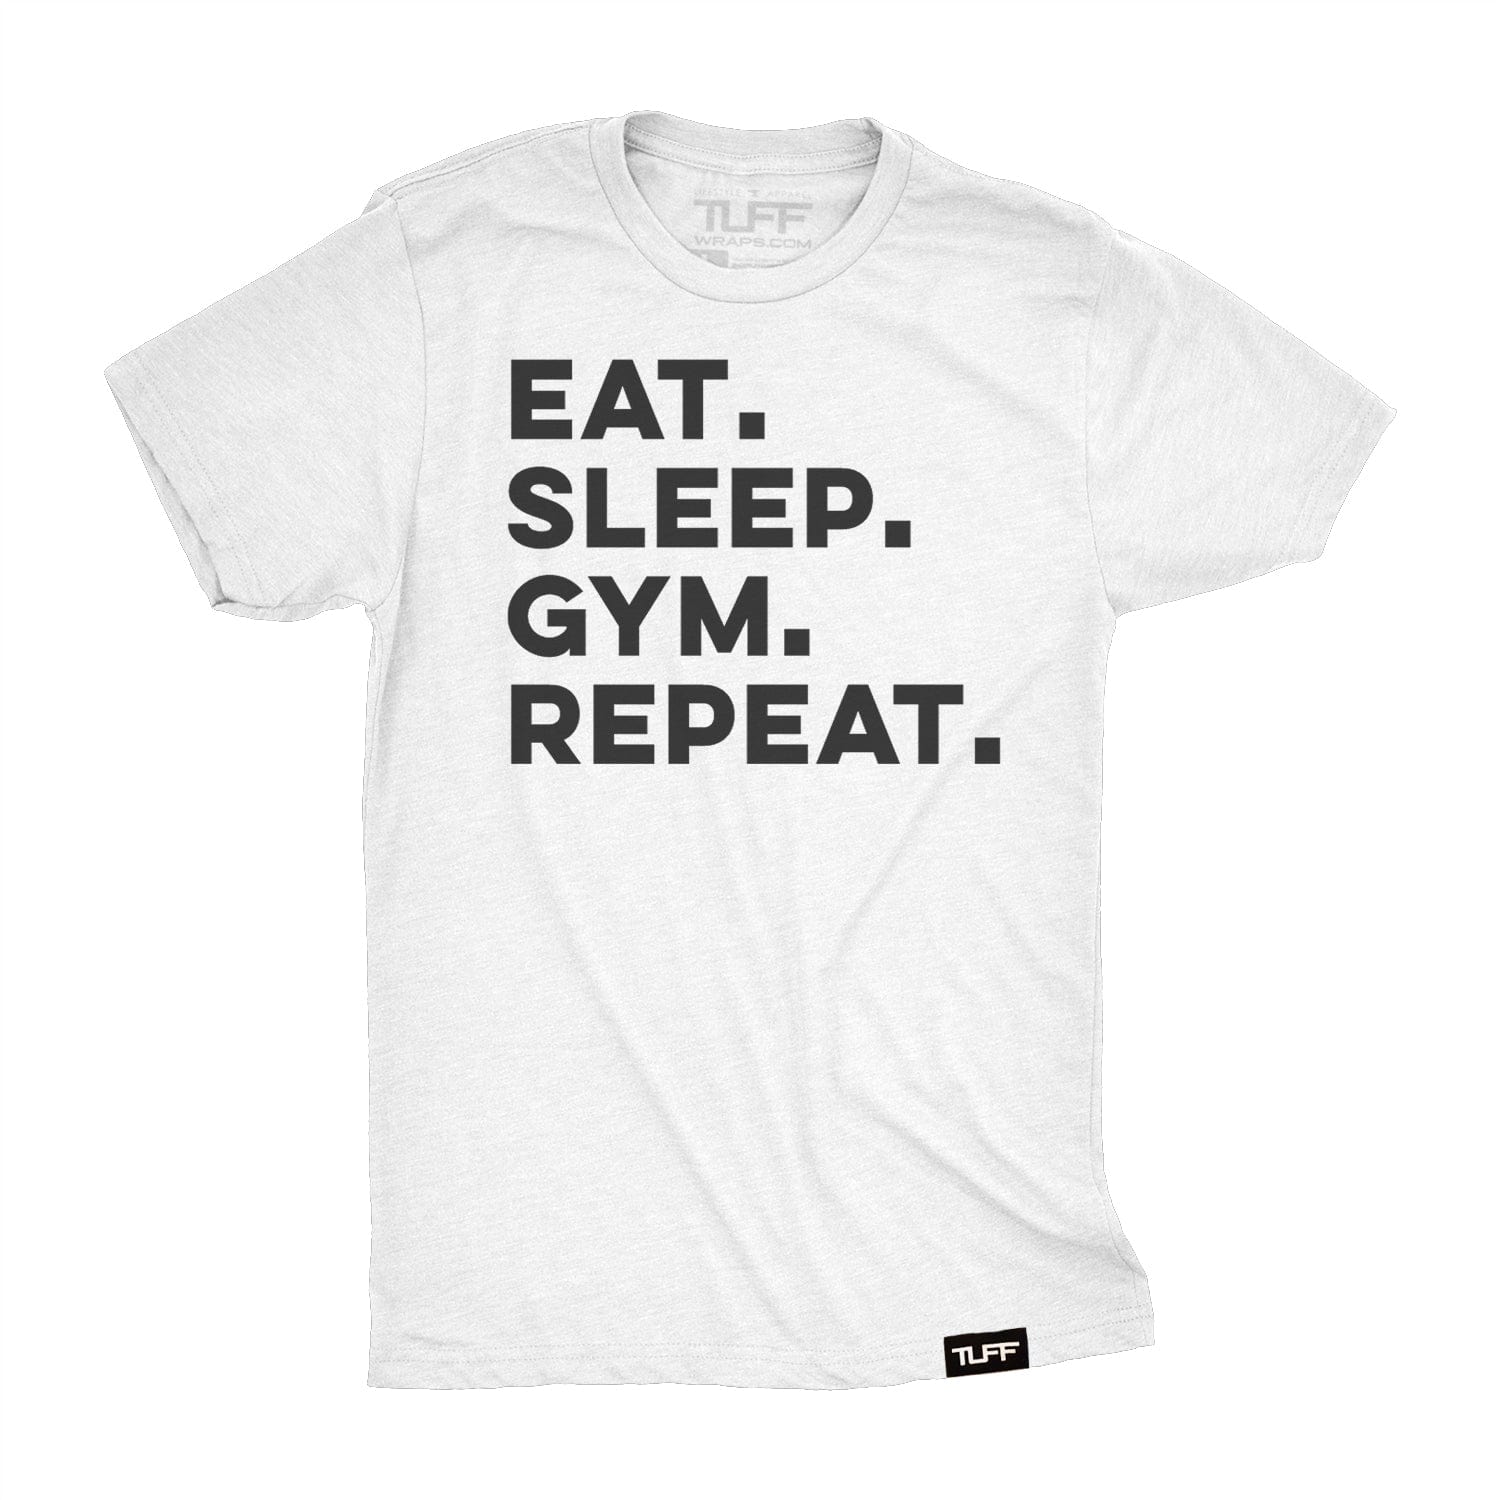 The Eat. Sleep. Gym. Repeat. Tee